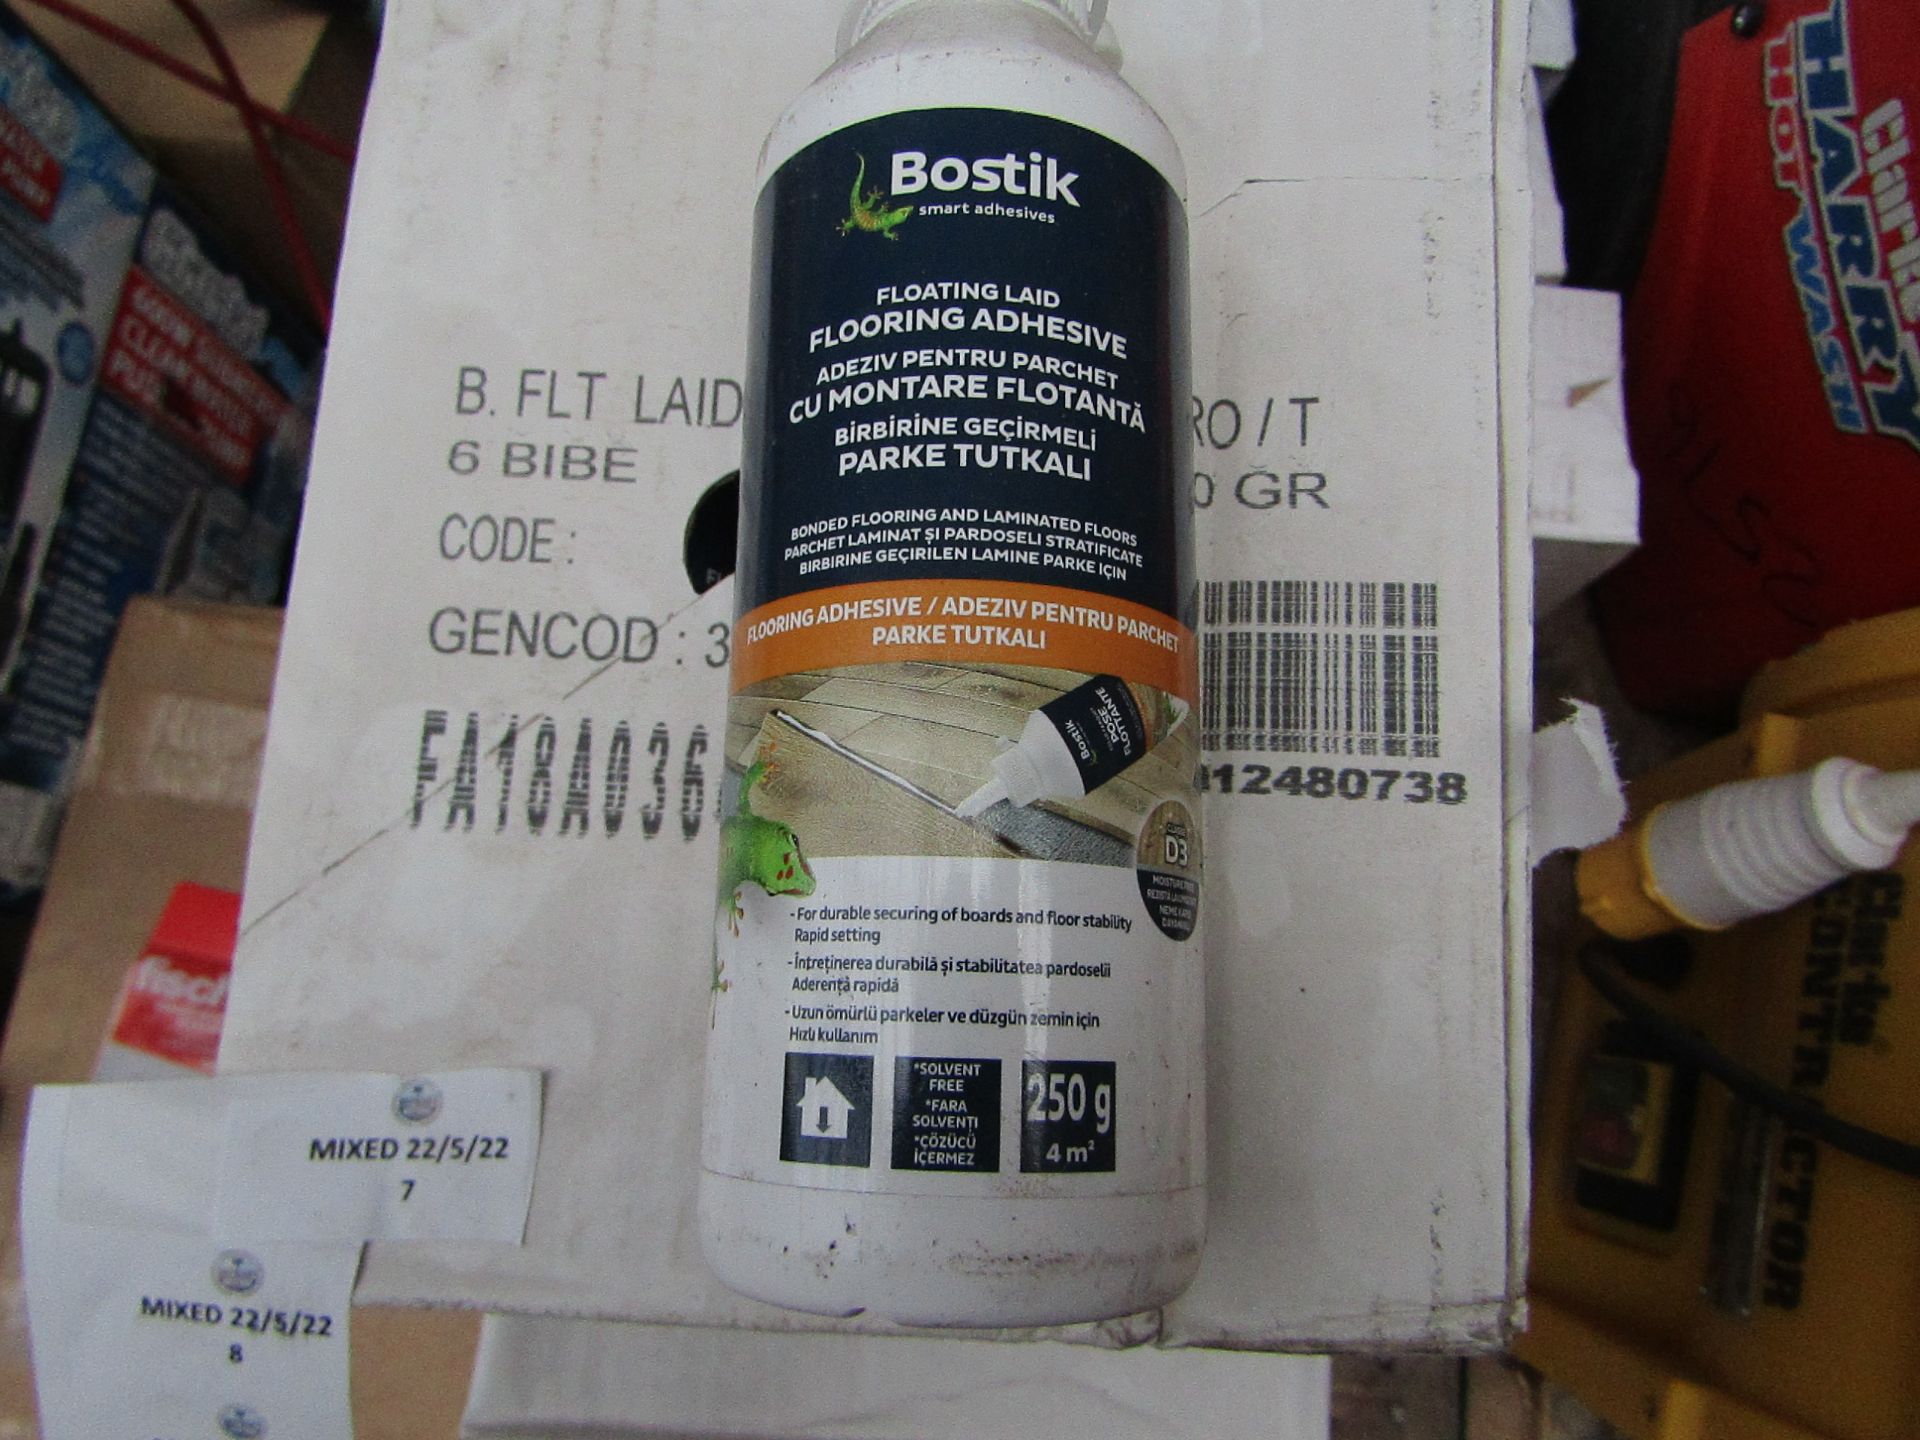 5x Boxes of 6x 250g bottles of Bostik Laminate floor adhesive - New & Sealed.